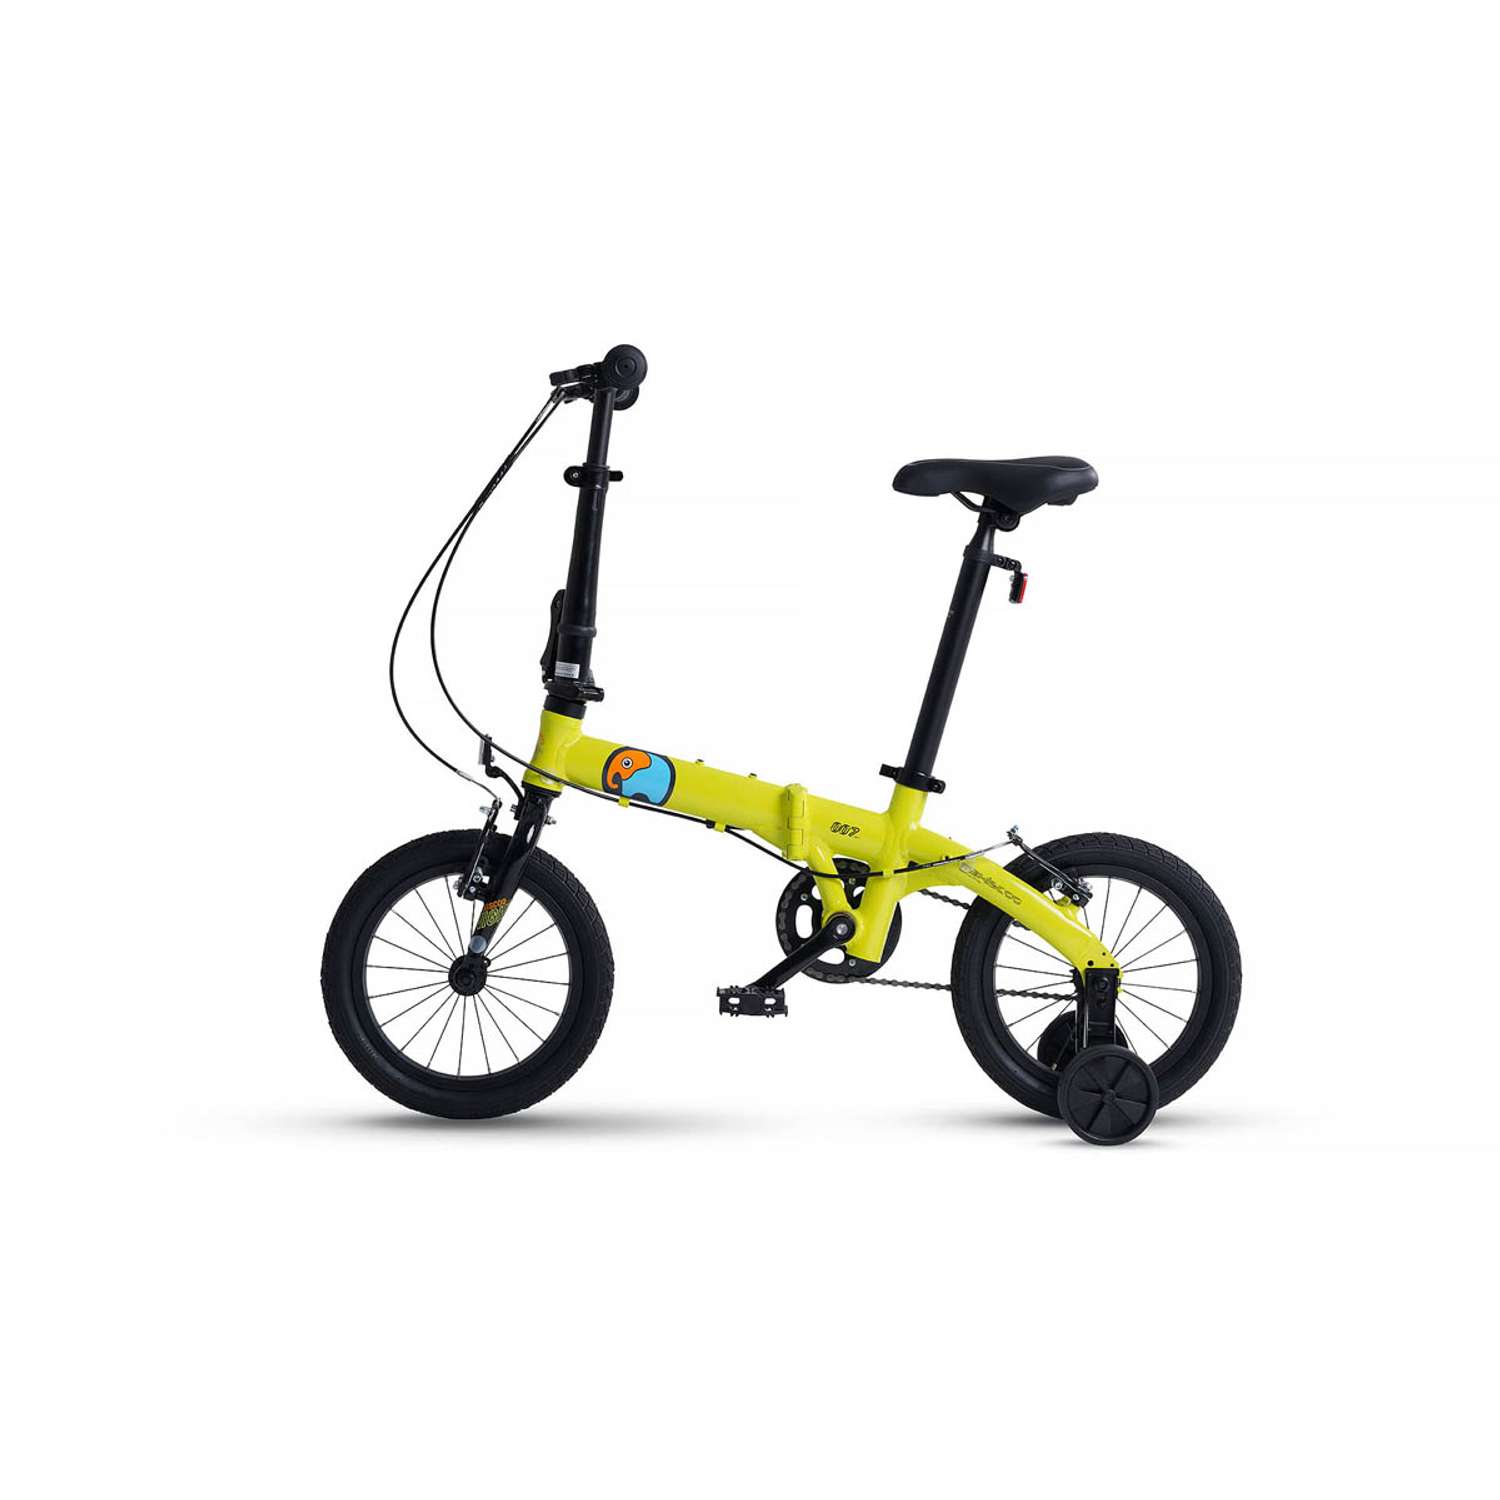 Велосипед Детский Складной Maxiscoo S007 стандарт 14 желтый - фото 3